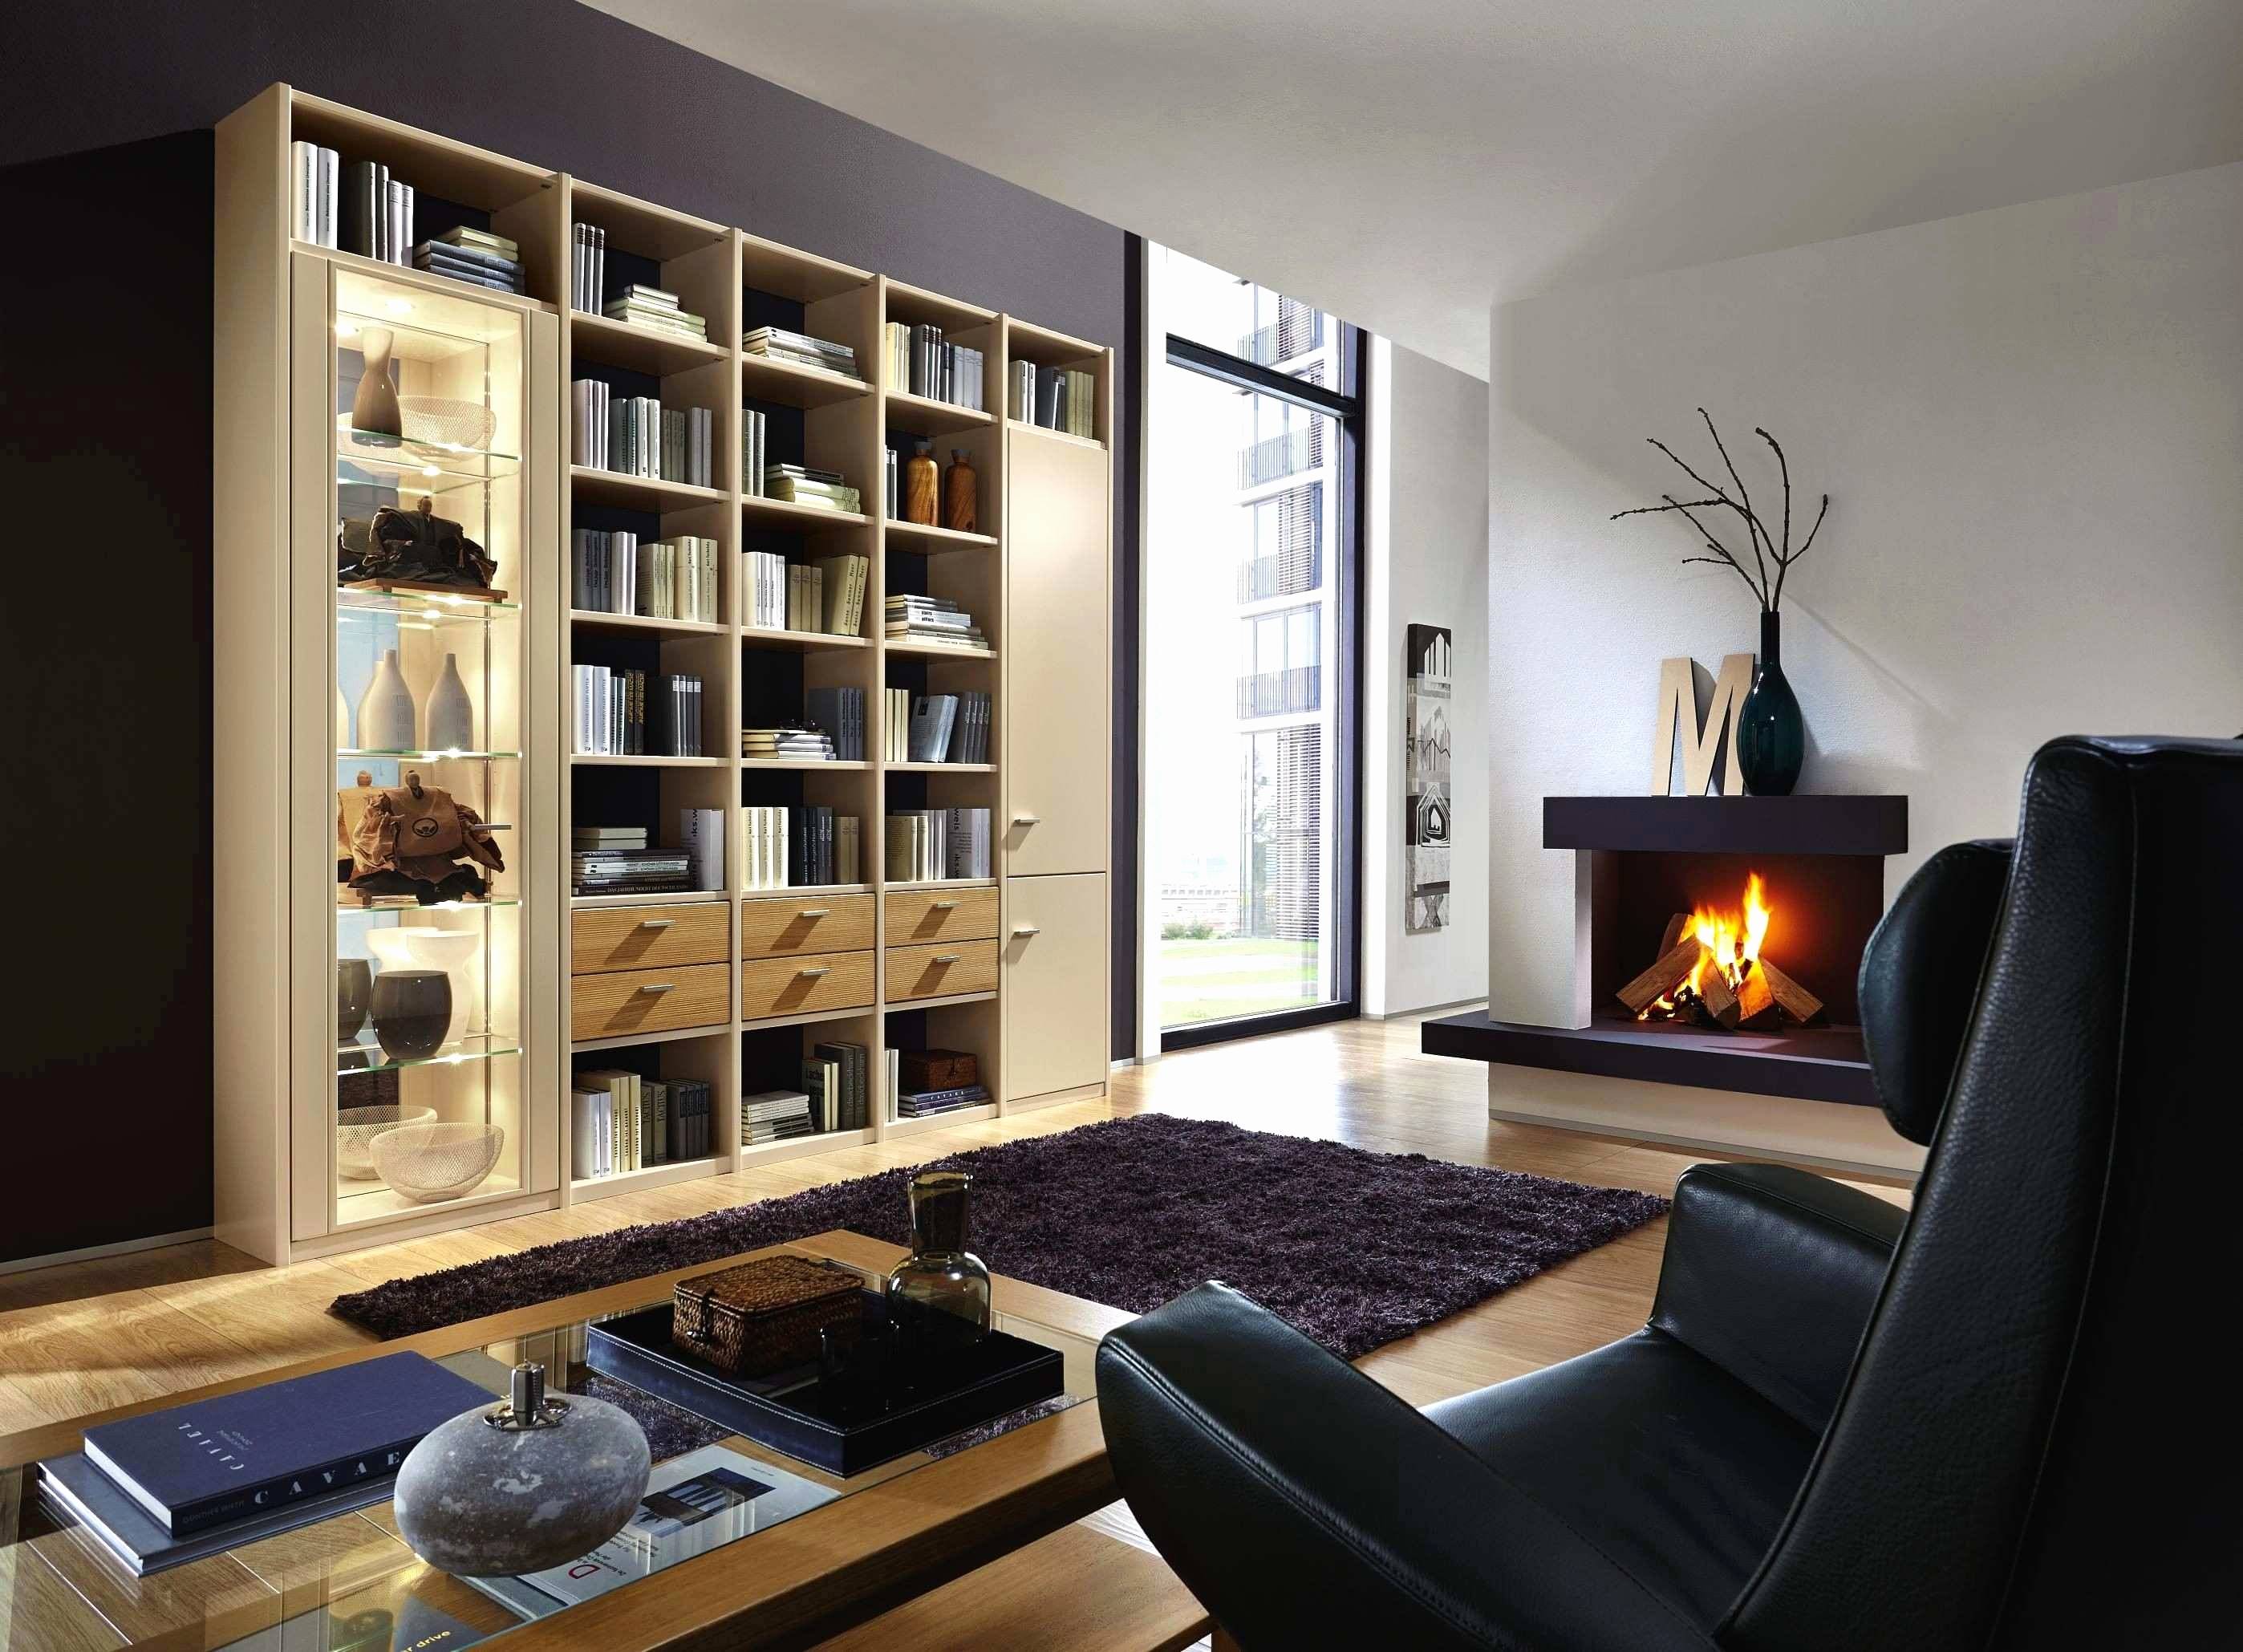 Center Room Fireplace Lovely Beautiful Wohnzimmerschrank Mit Kamin Concept